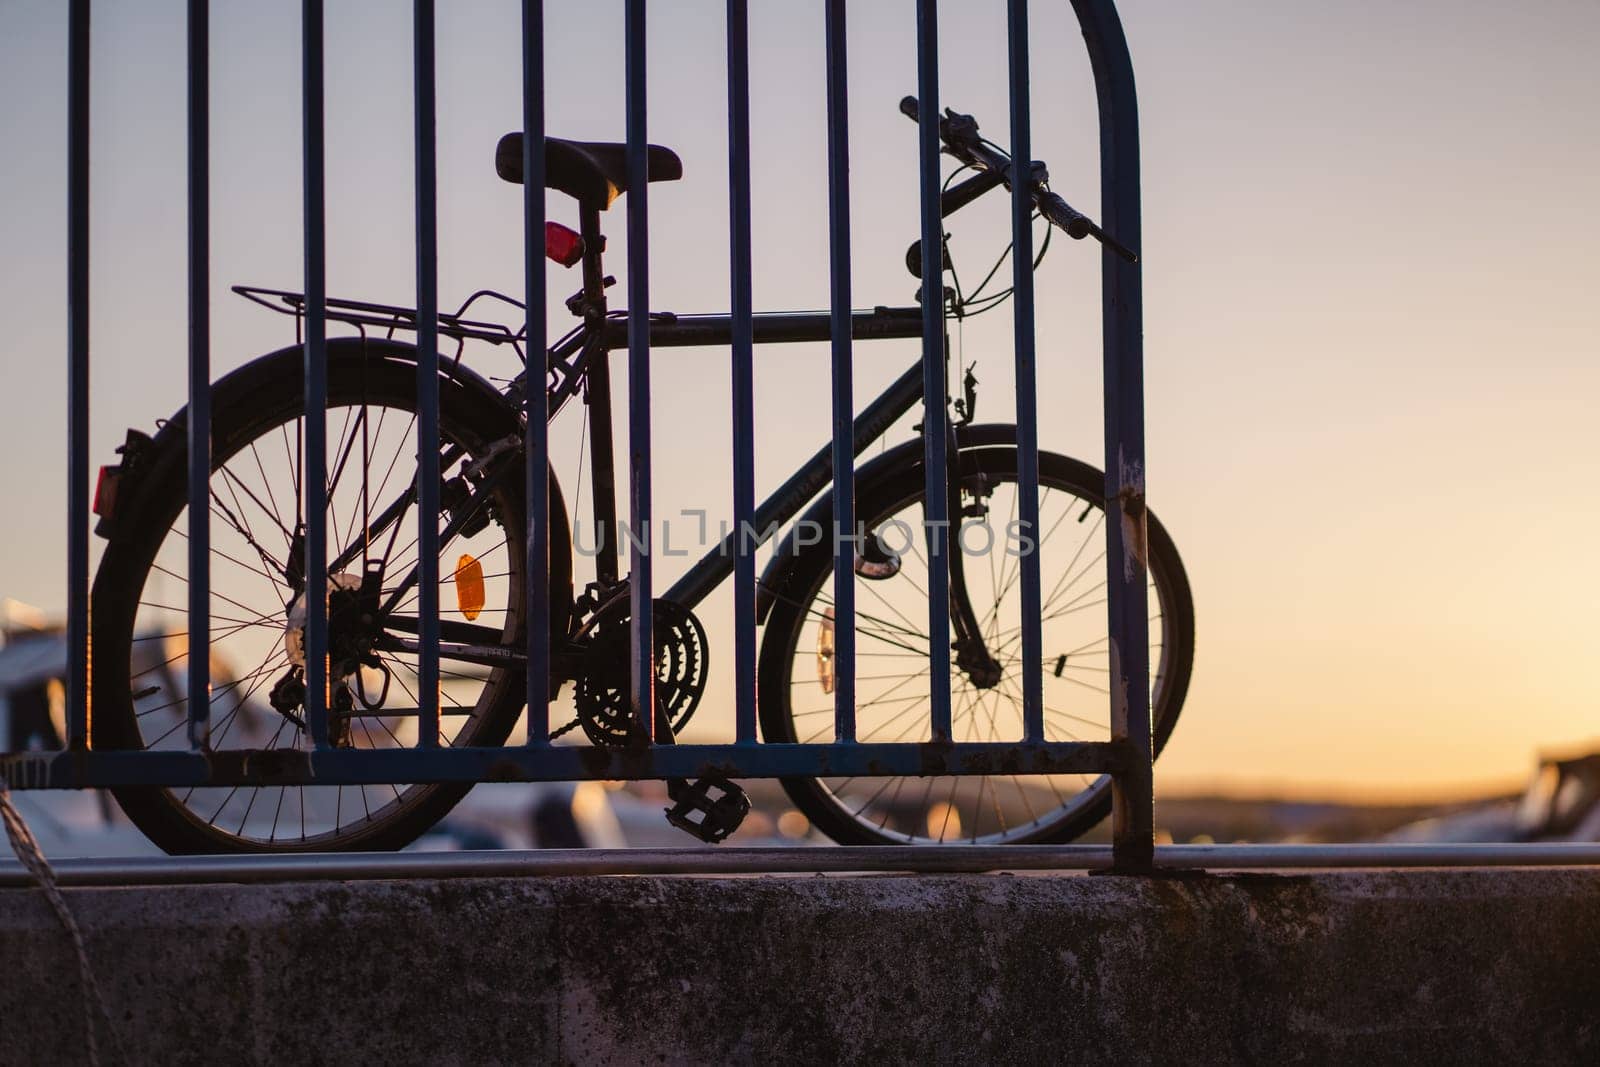 Bike parking at sunset pier of Biograd na Moru port in Croatia by Popov